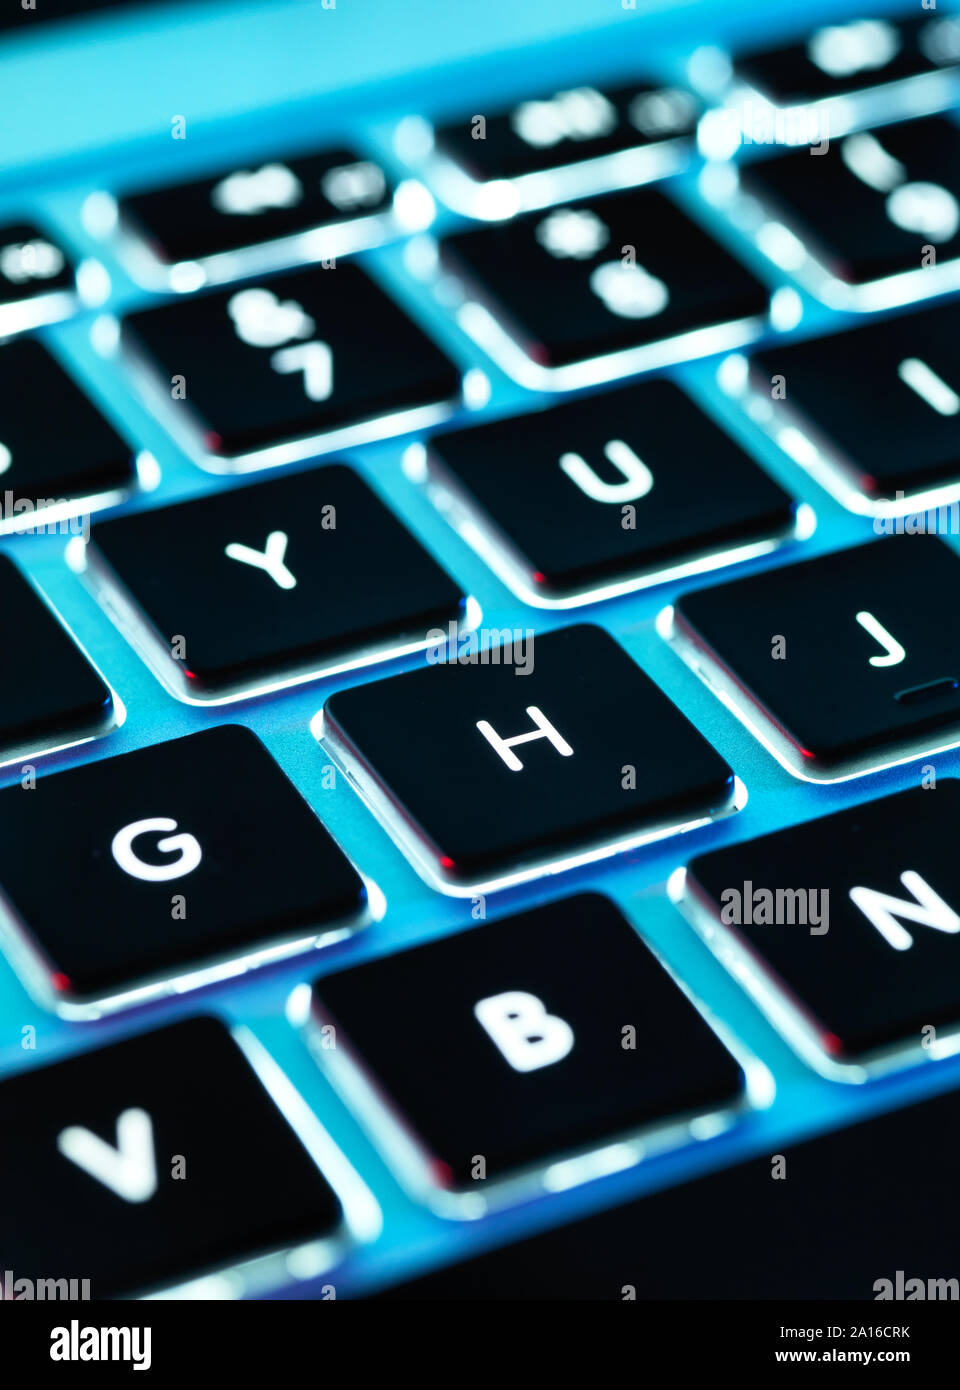 Laptop computer keyboard, close-up Stock Photo